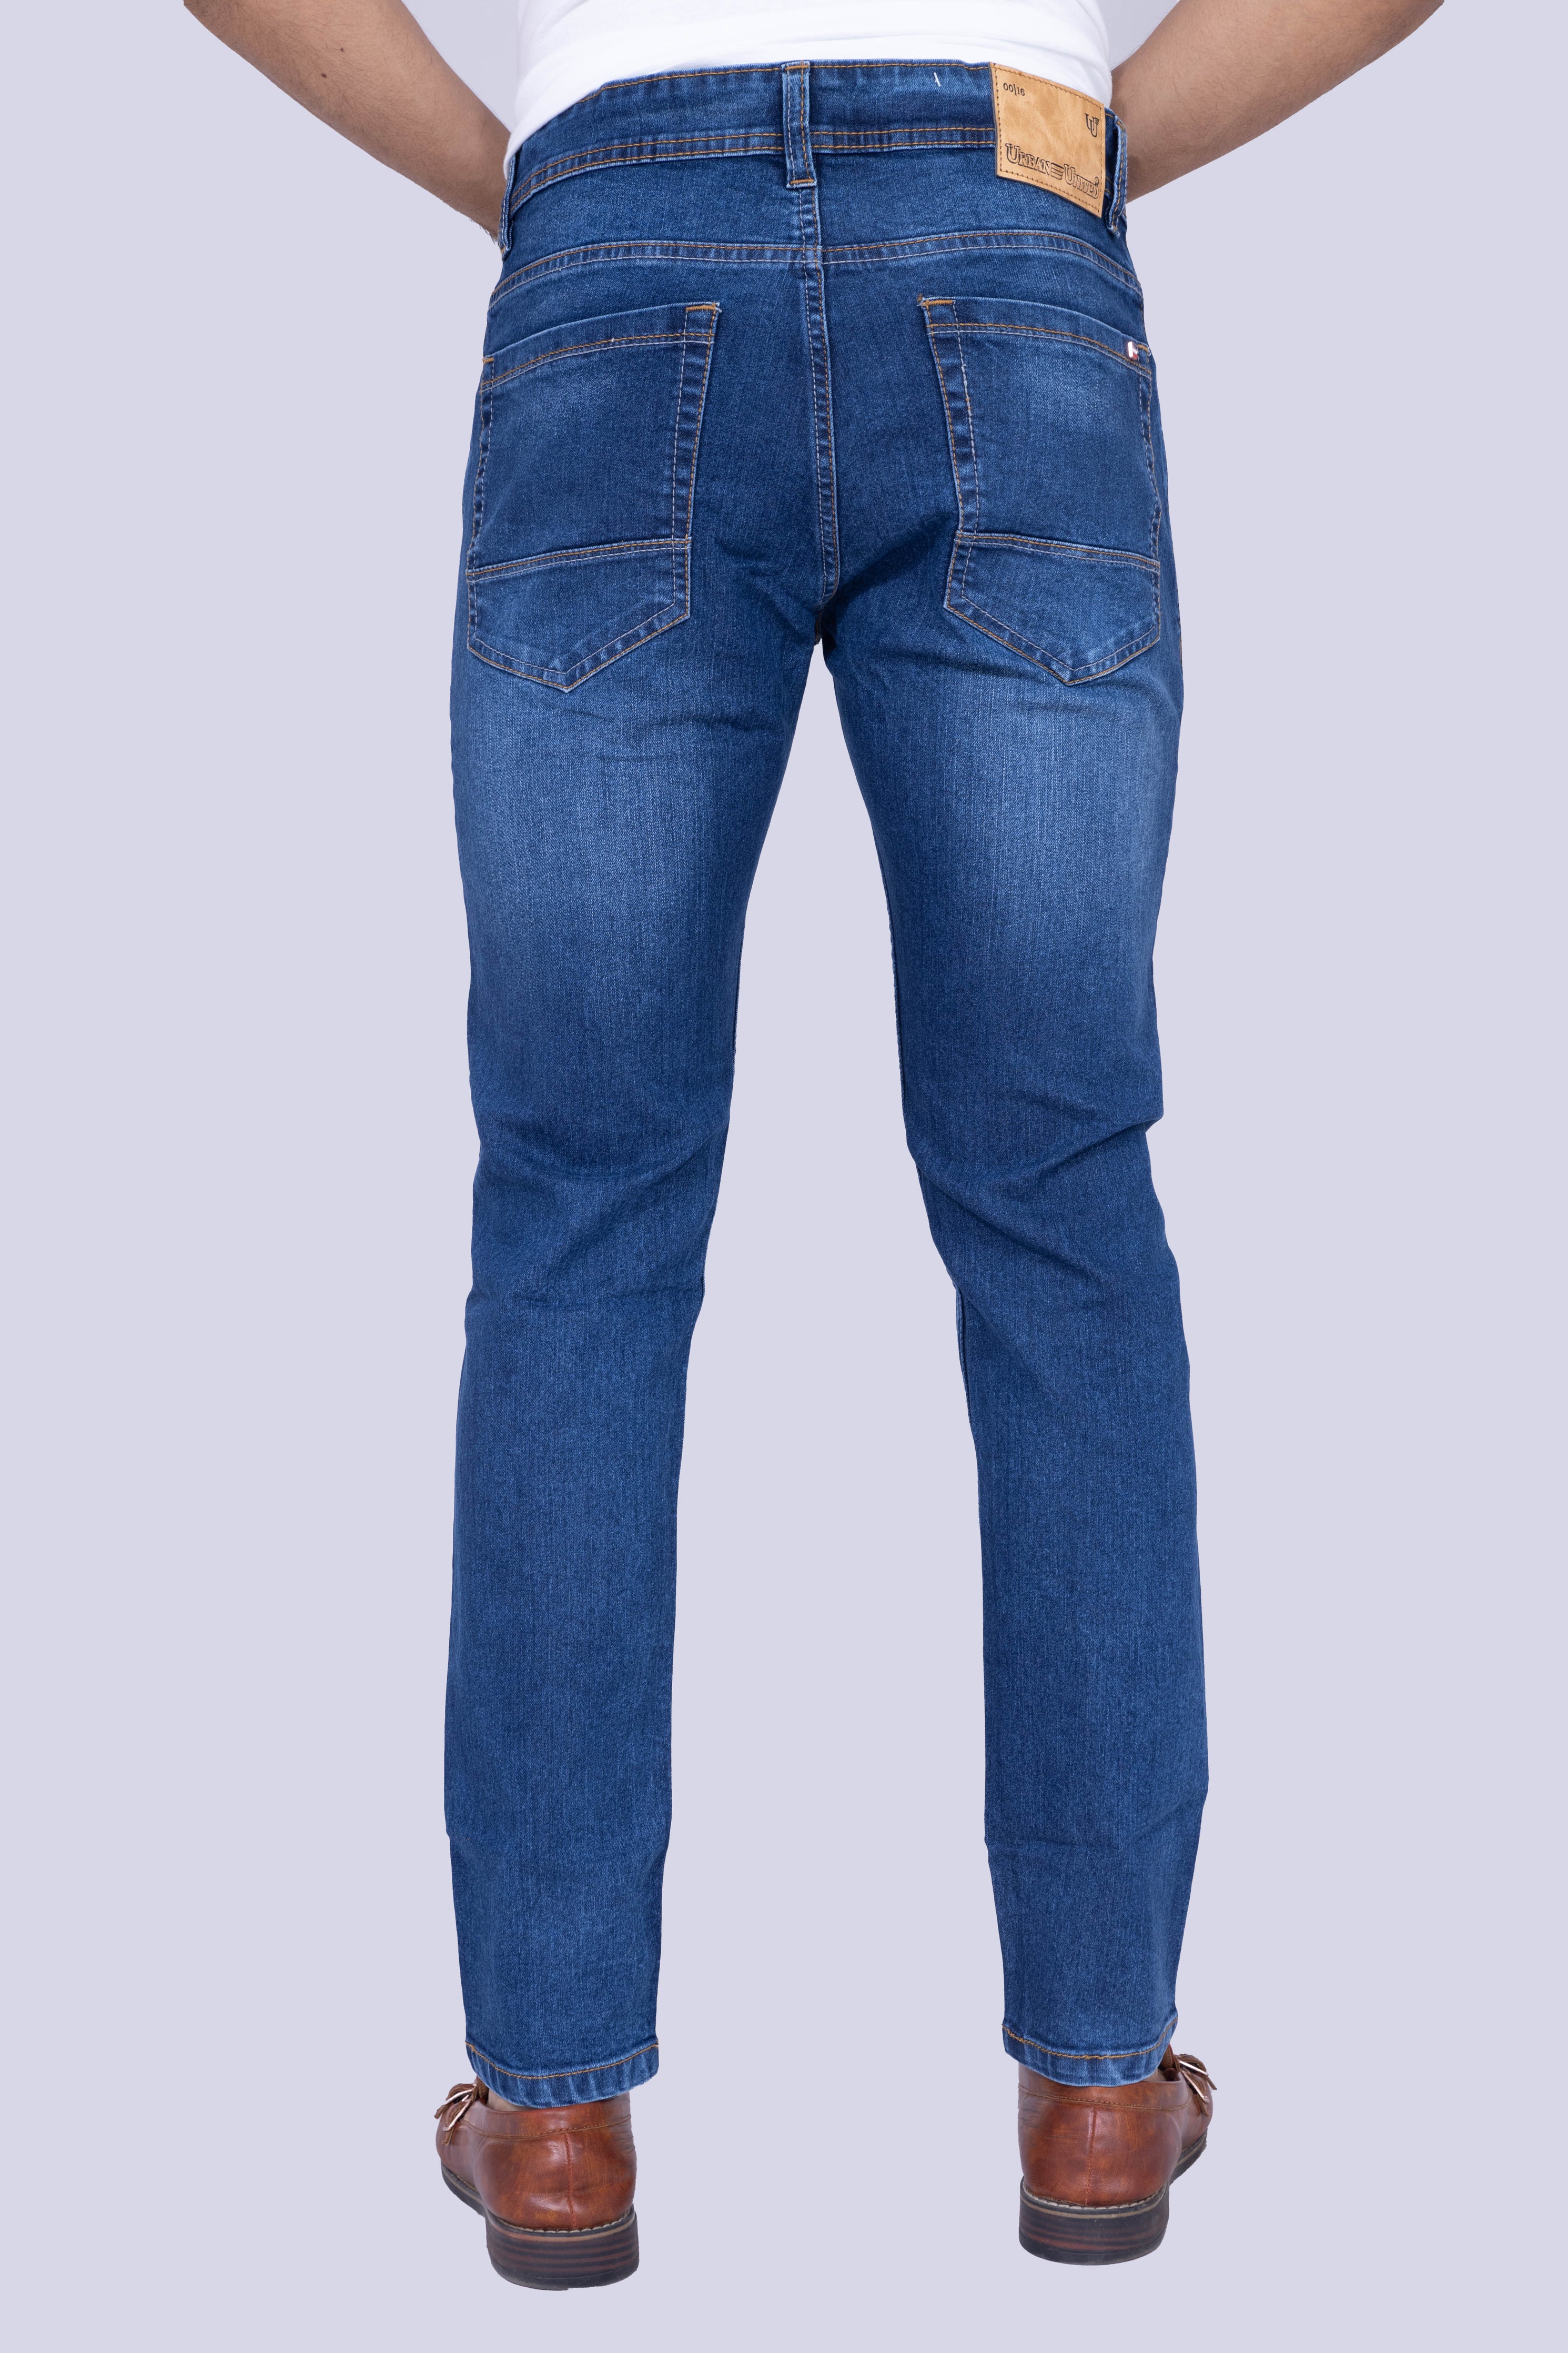 Classic Mid-wash Indigo Narrow fit Jeans